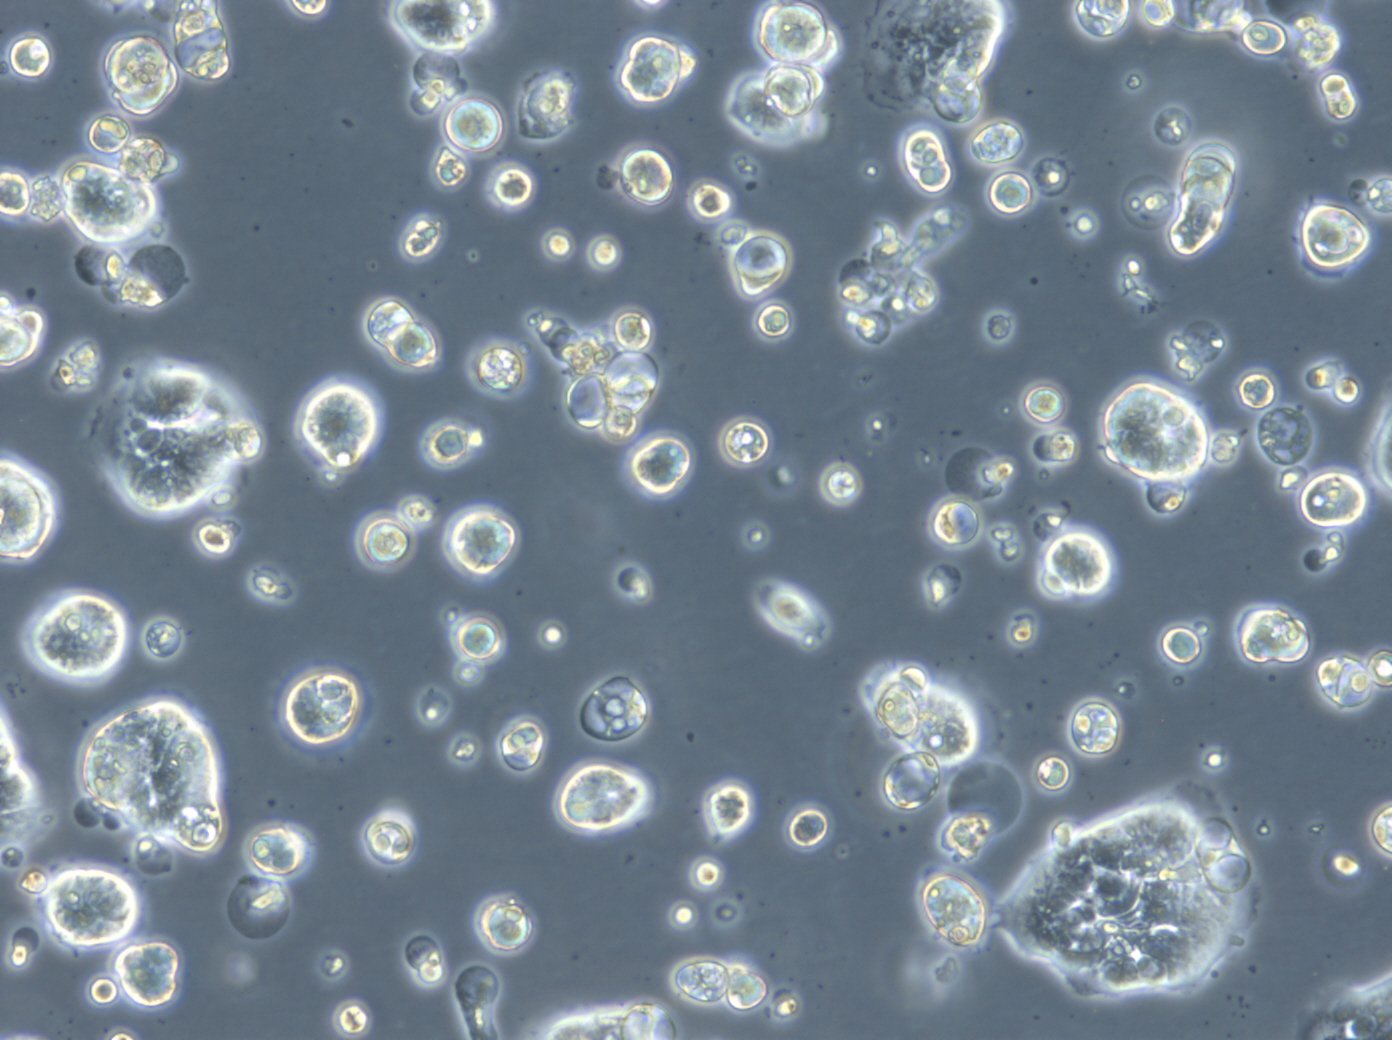 HROC183 Cells